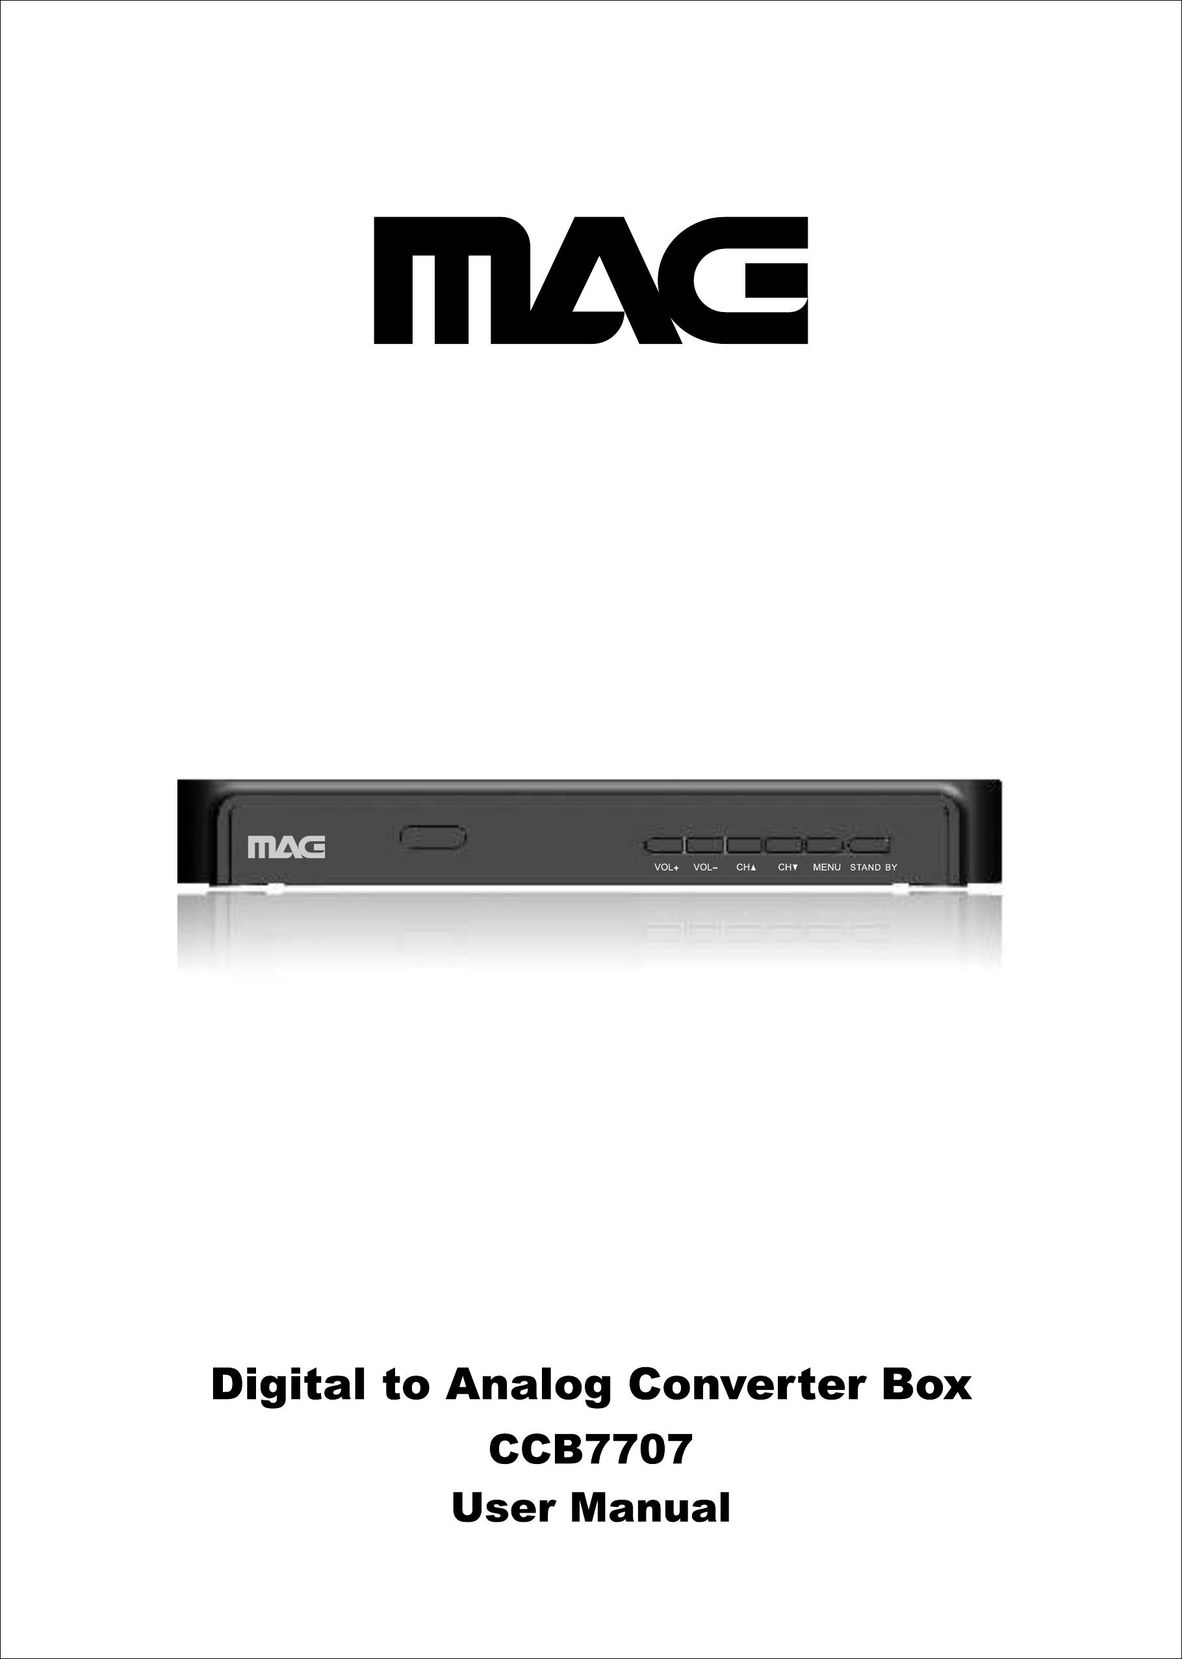 Mag Digital CCB7707 TV Converter Box User Manual